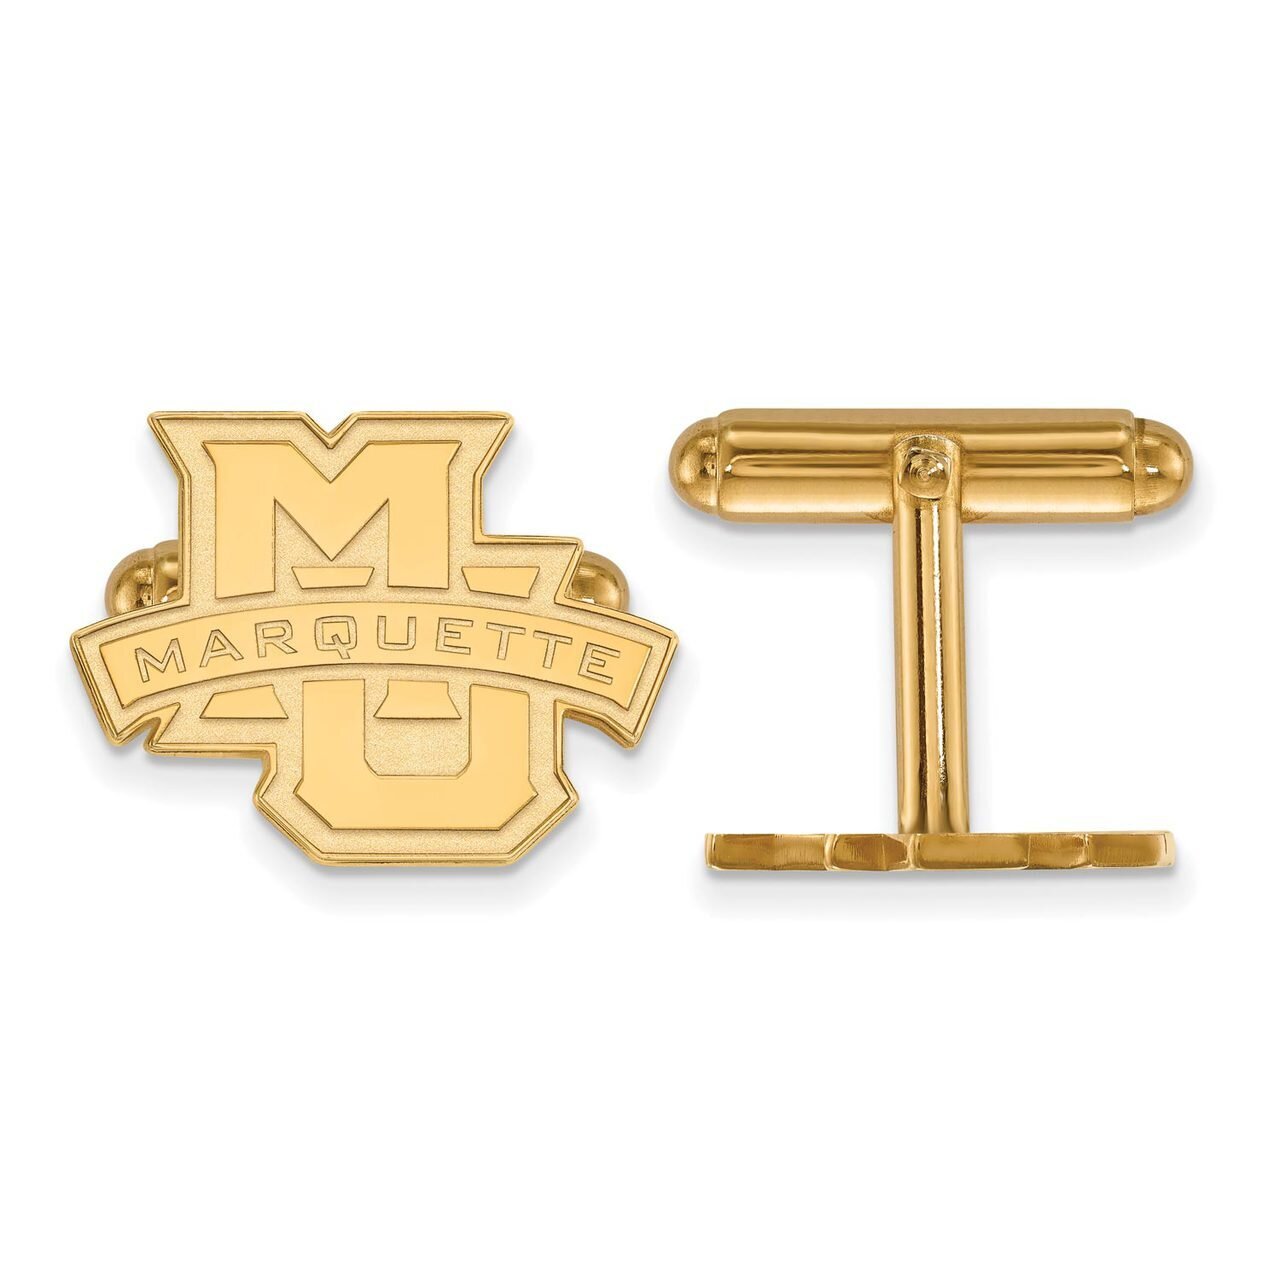 Marquette University Cufflinkss 14k Yellow Gold 4Y029MAR